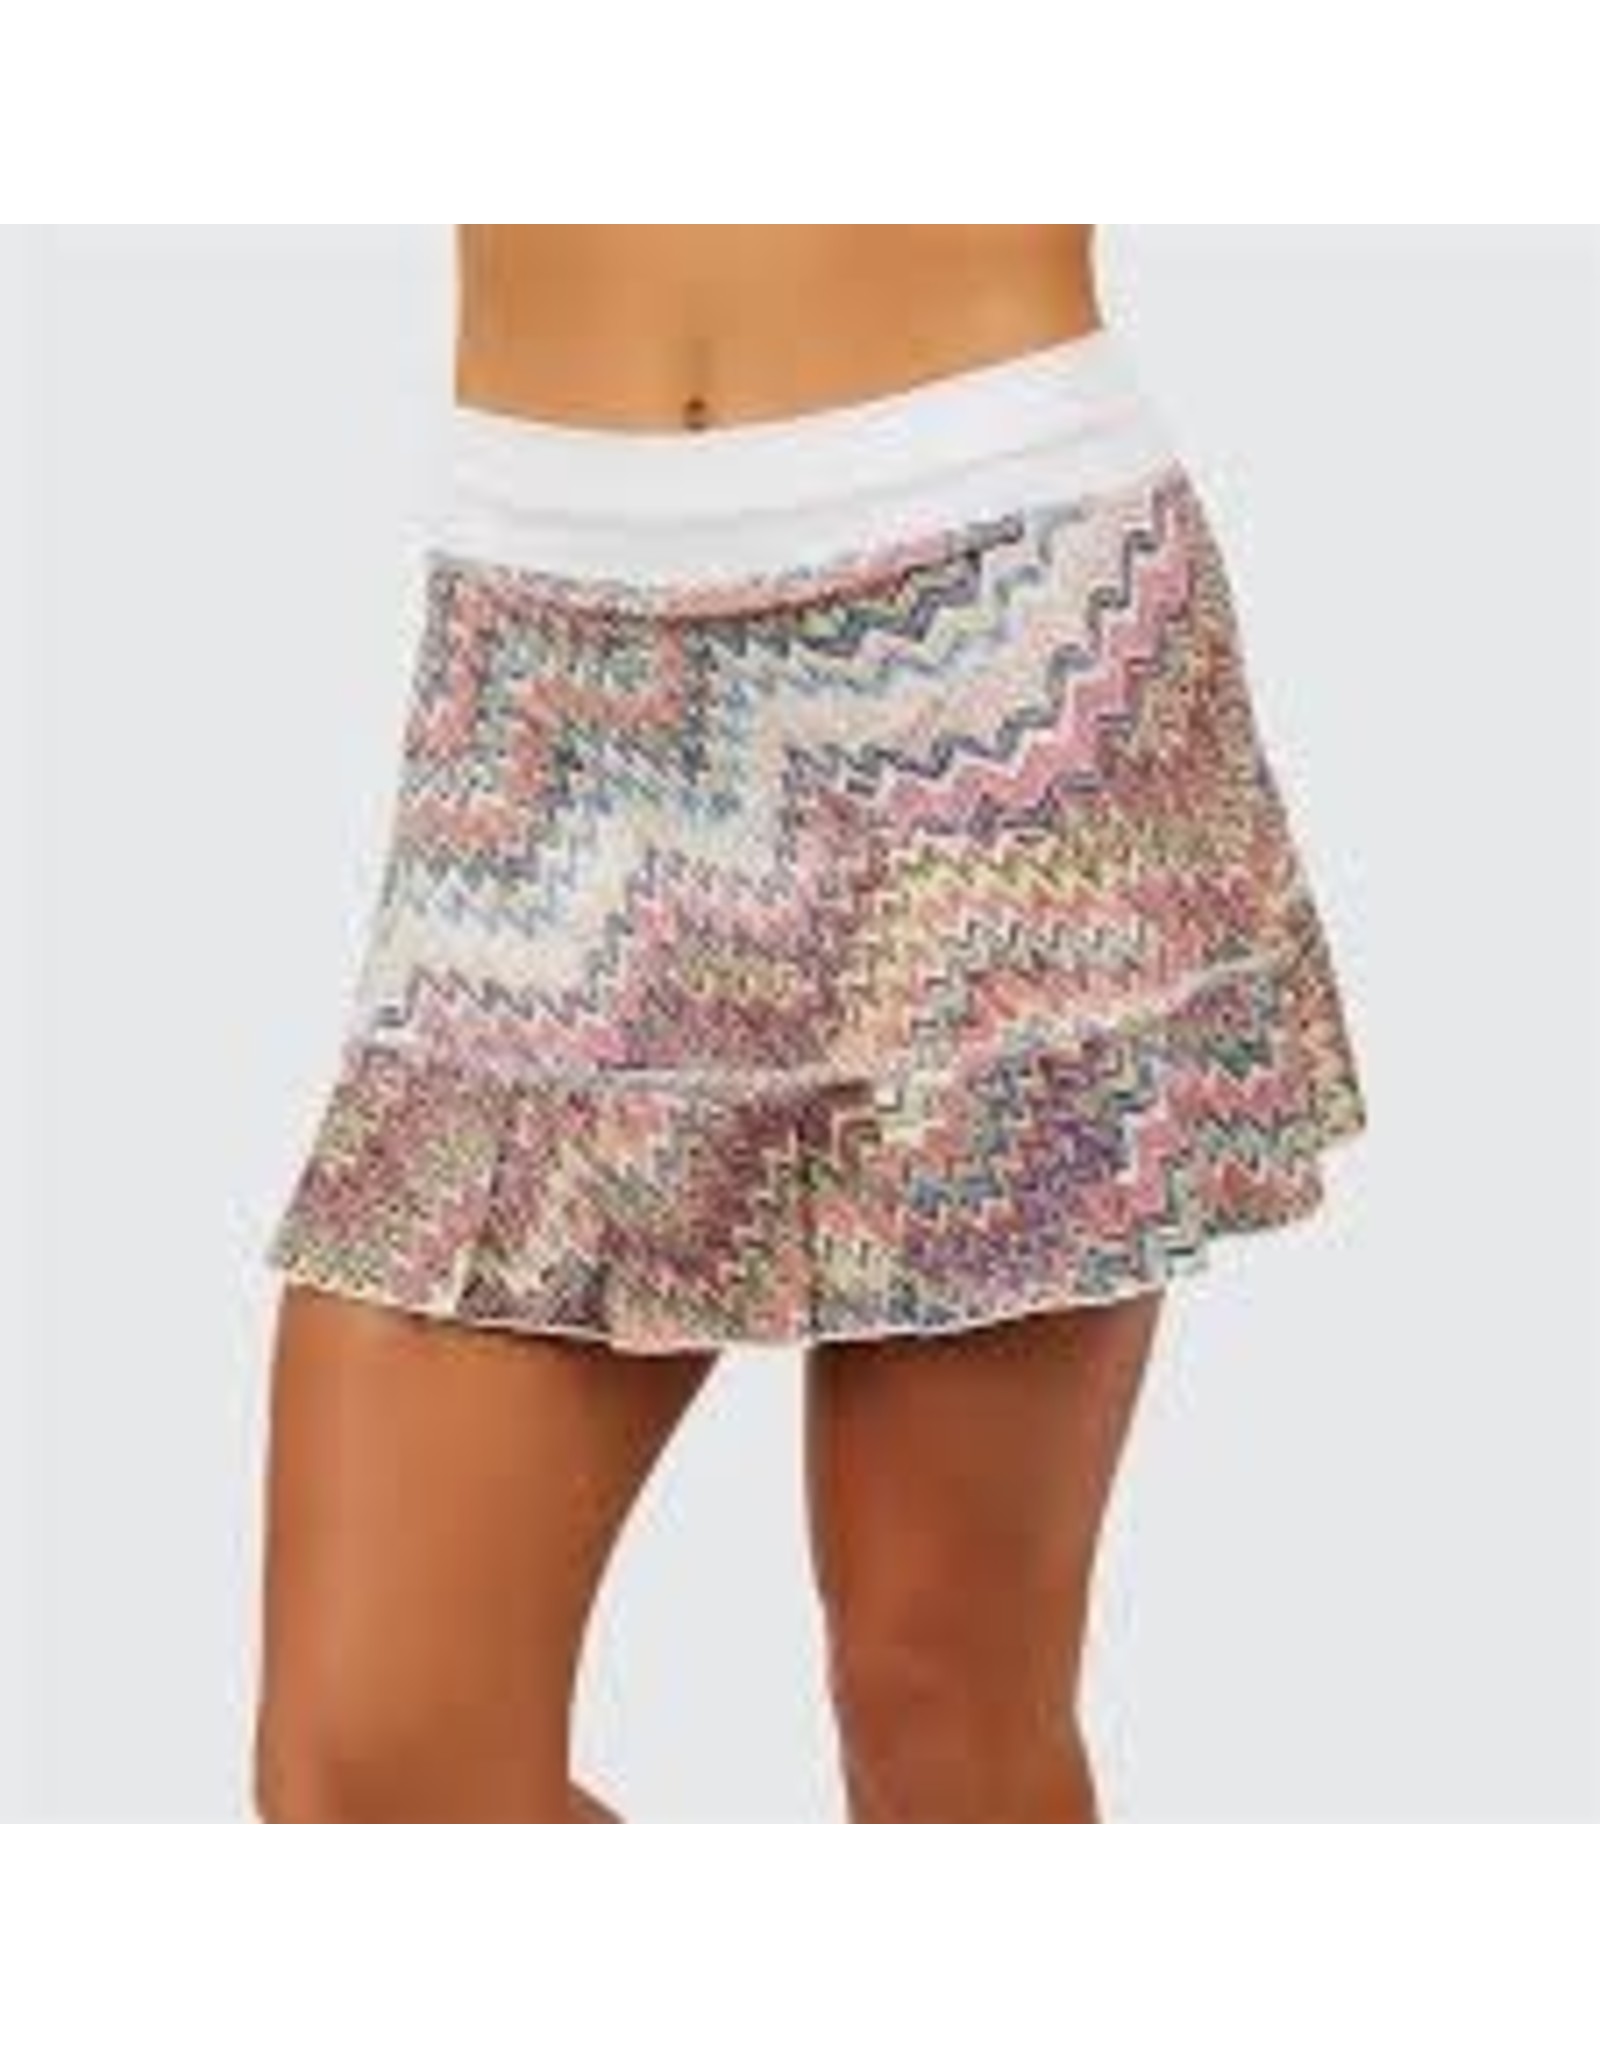 UV Colors 14 inch Skirt XL